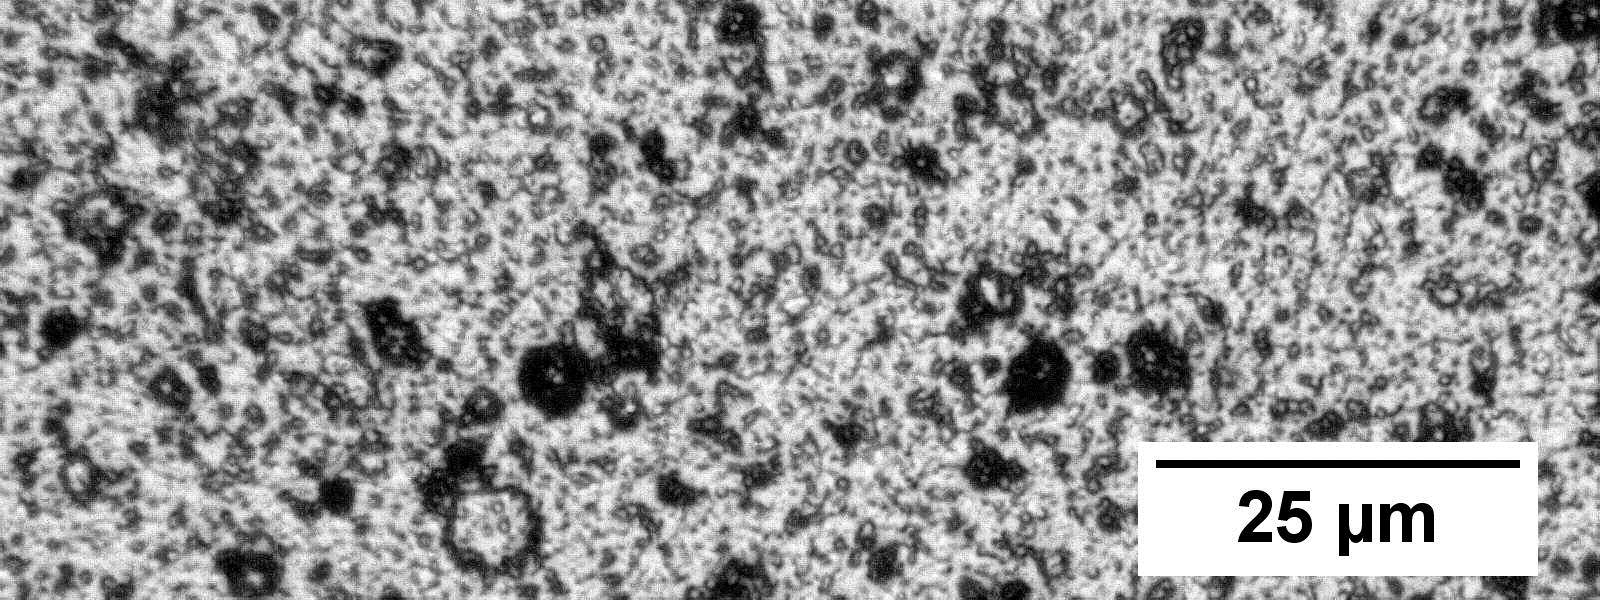 2-2015 a) b) TRIBOLOGIA 15 Sa = 0,08 µm Sa = 0,07 µm Rys. 2. Morfologia i topografia powierzchni powłok: a) AlTiCrN2, b) AlTiCrN4 Fig 2.